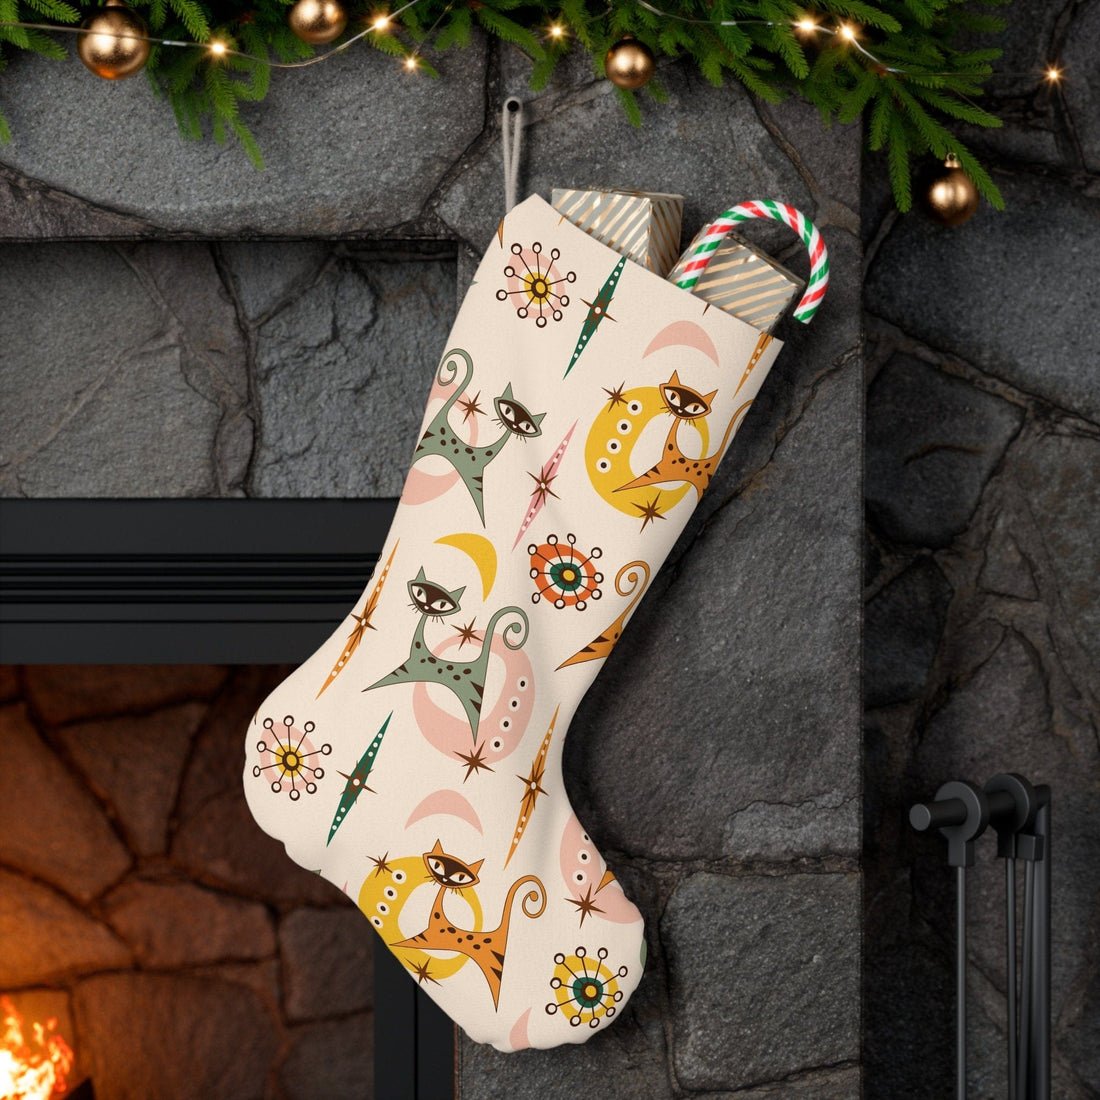 Kate McEnroe New York Atomic Kitschy Cat Santa Stocking, 50s Retro Vintage Style Diamond Starburst Christmas Stockings, MCM Holiday DecorHoliday Stockings98446025884550017112